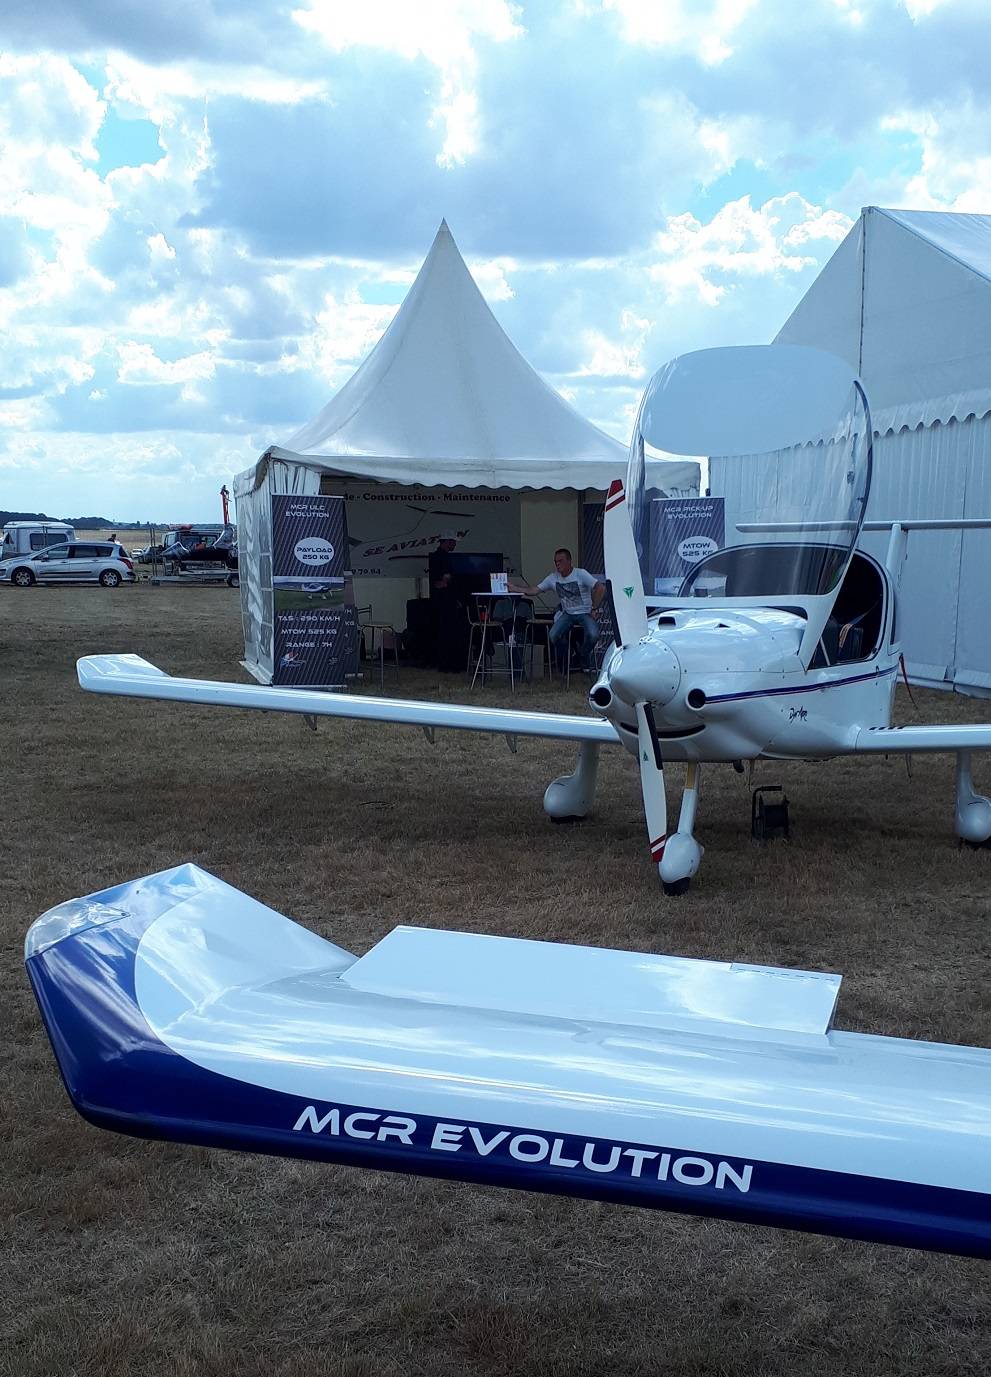 MCR EVOLUTION SE AVIATION AIRCRAFT MONDIAL ULM BLOIS